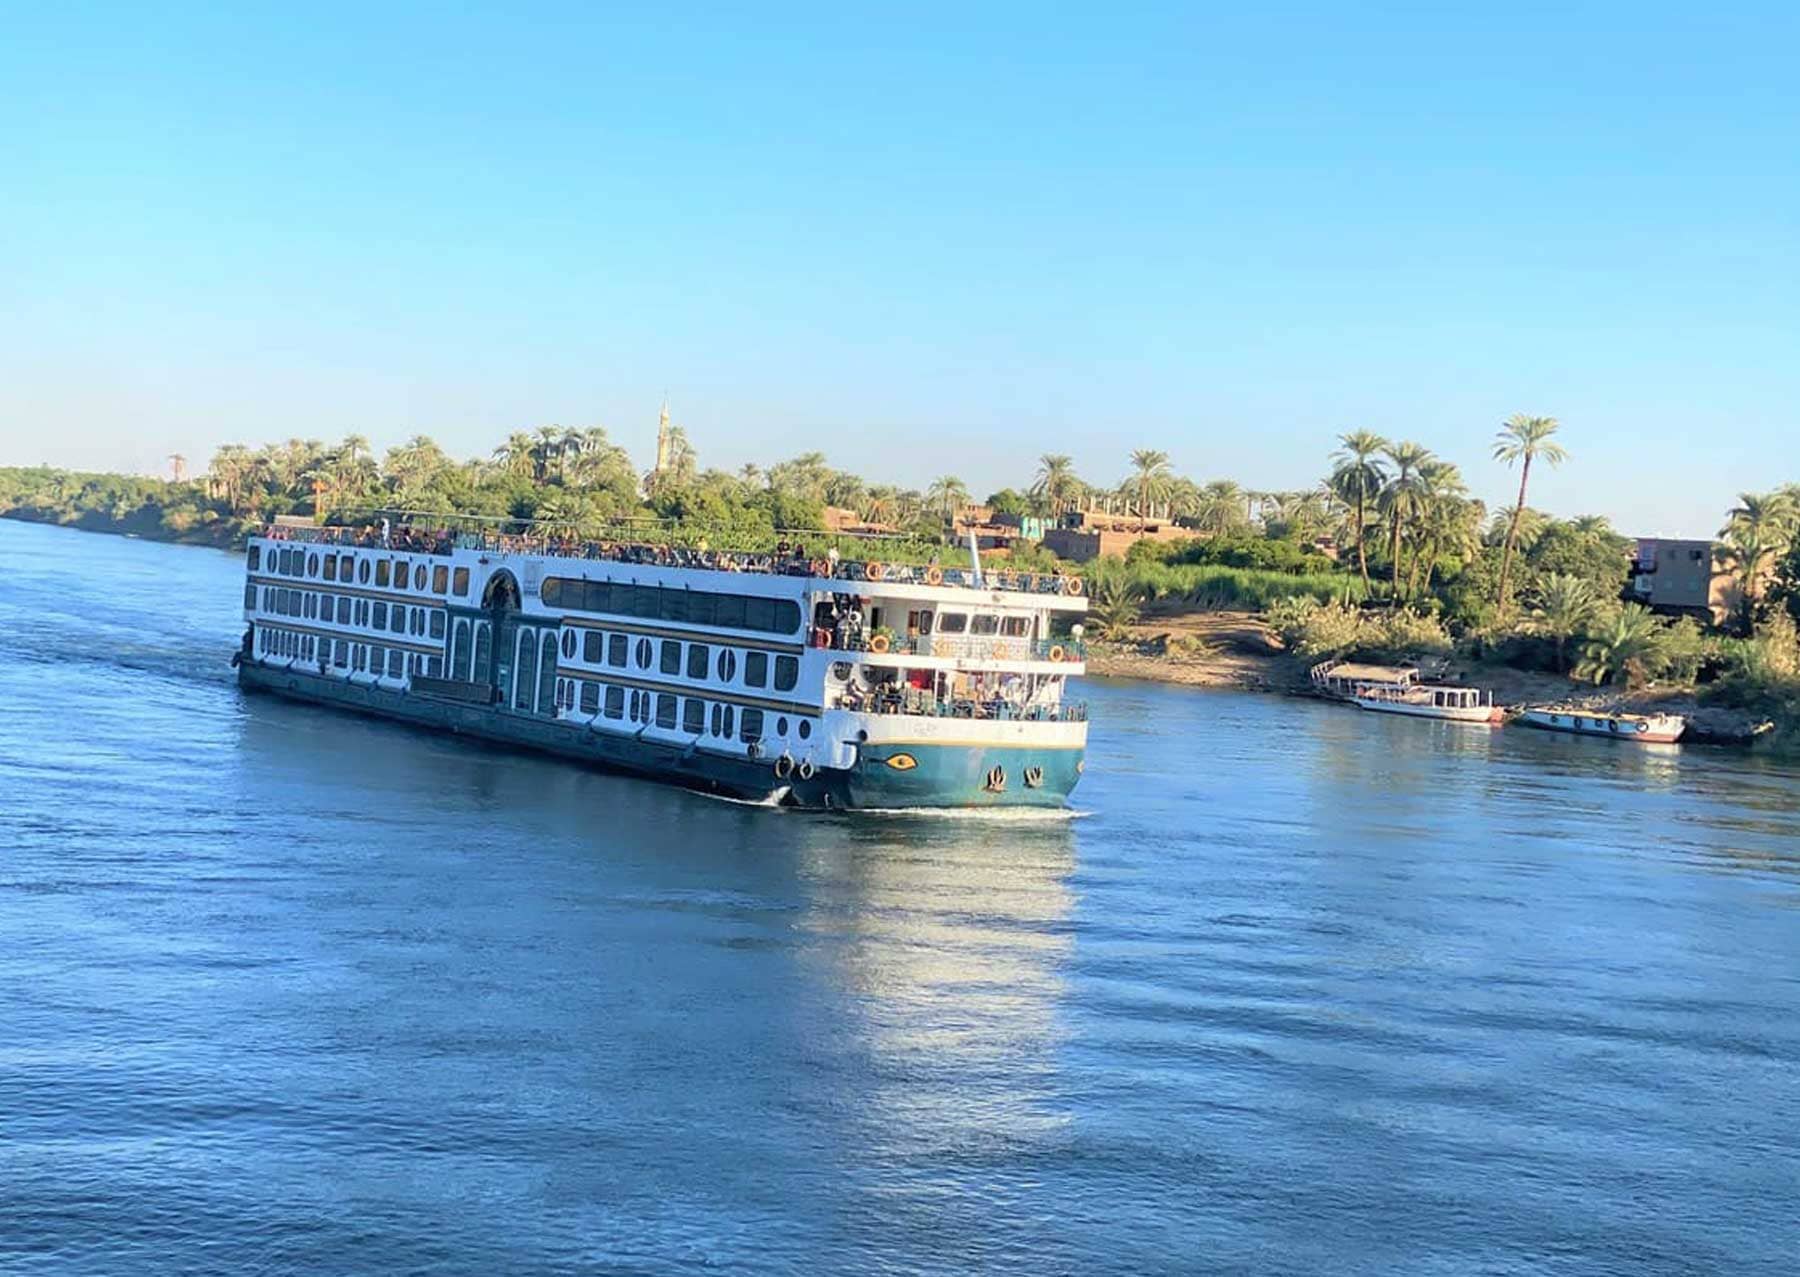 Nile cruise in Egypt